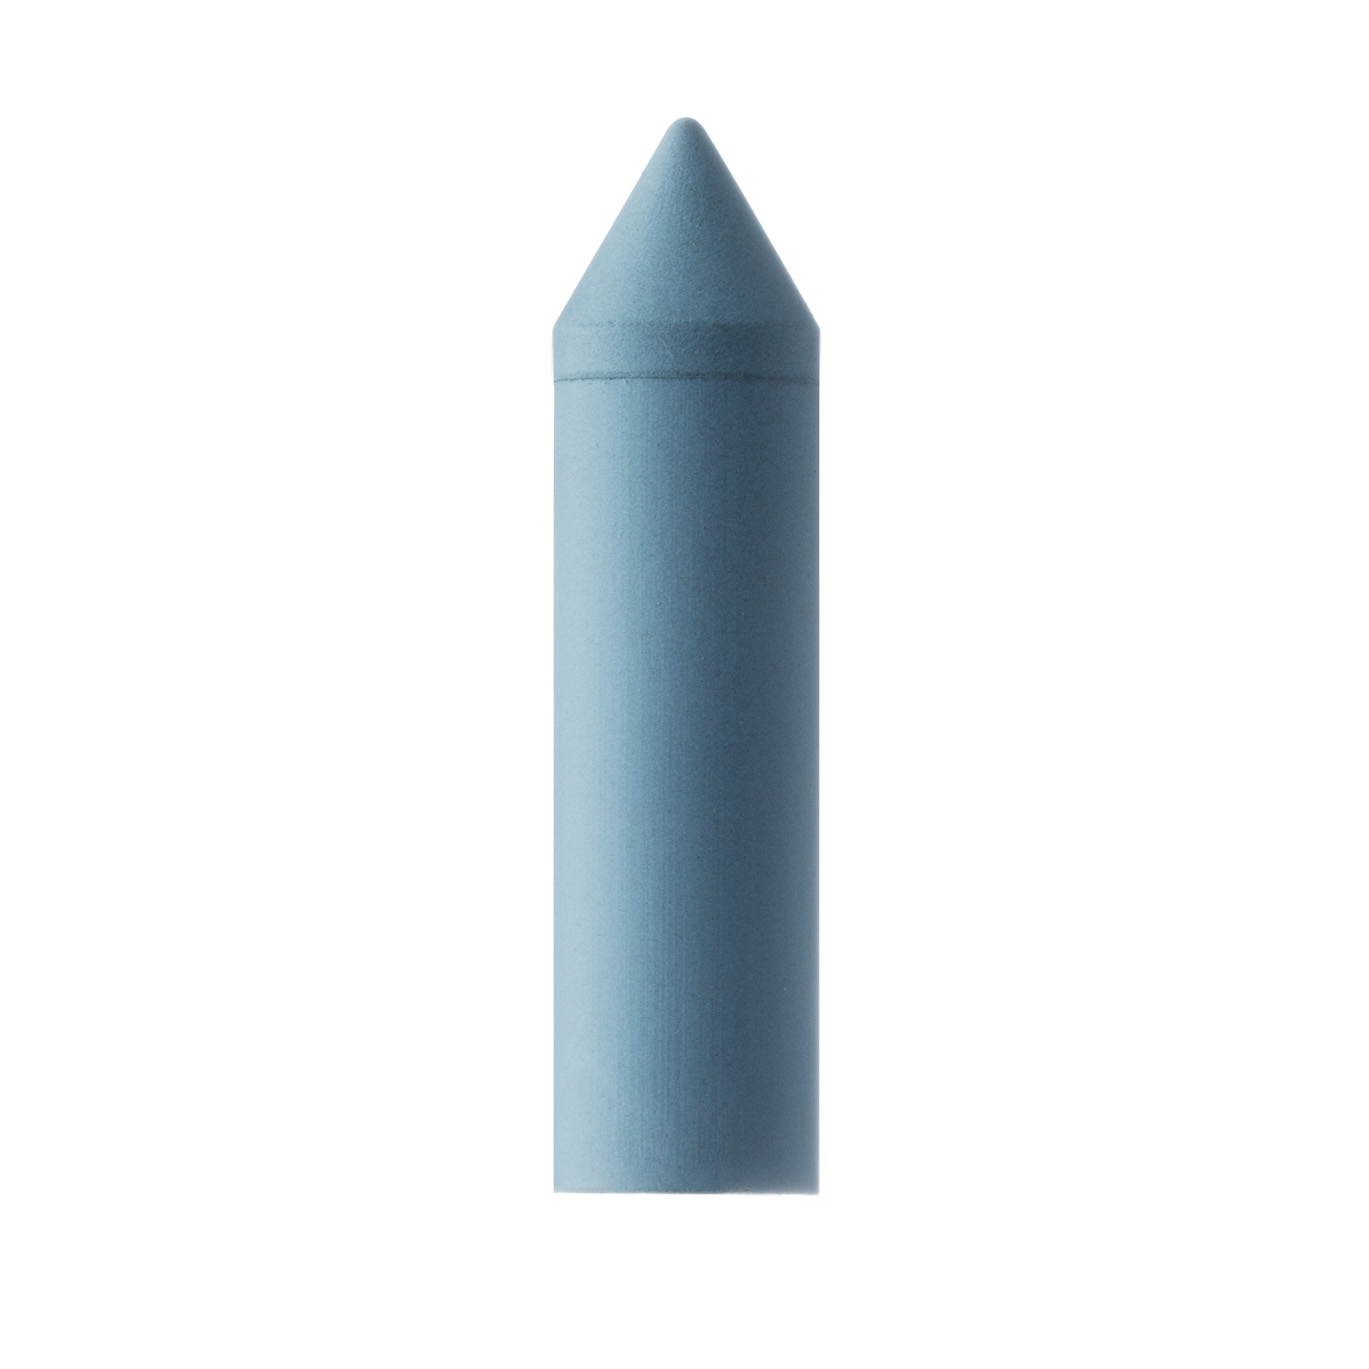 9687P-060-UNM-BL Polisher, Universal Polishing System, Blue, Pointed Cylinder, 6mm Ø, High Shine Polishing, UNM